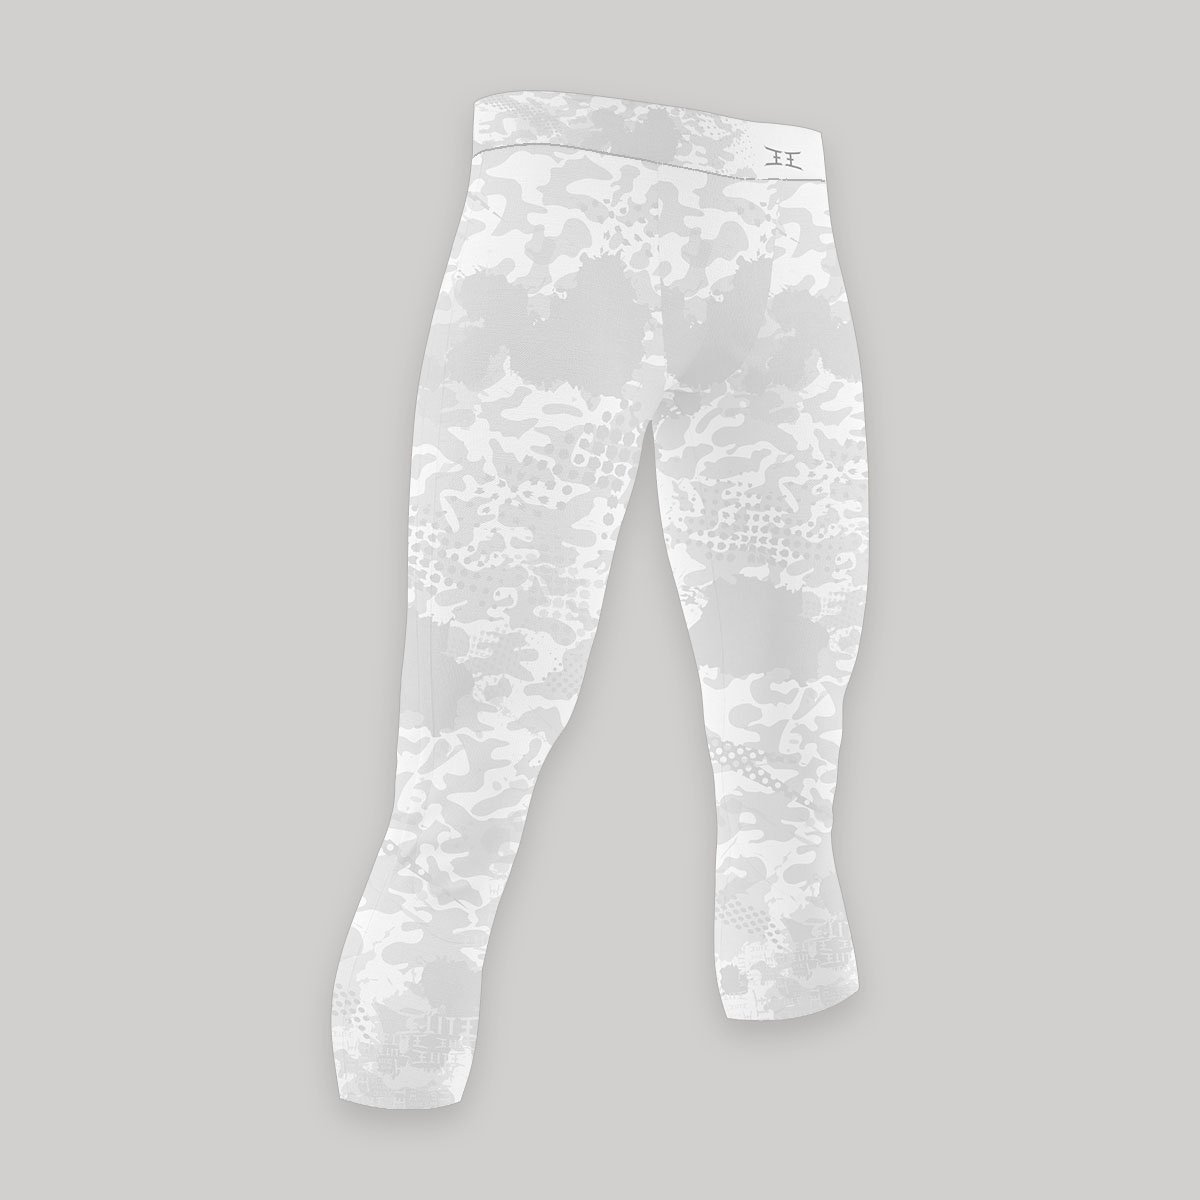 Calza Corta Mujer Diseño Basic Blanco – ELITE Strong Wear